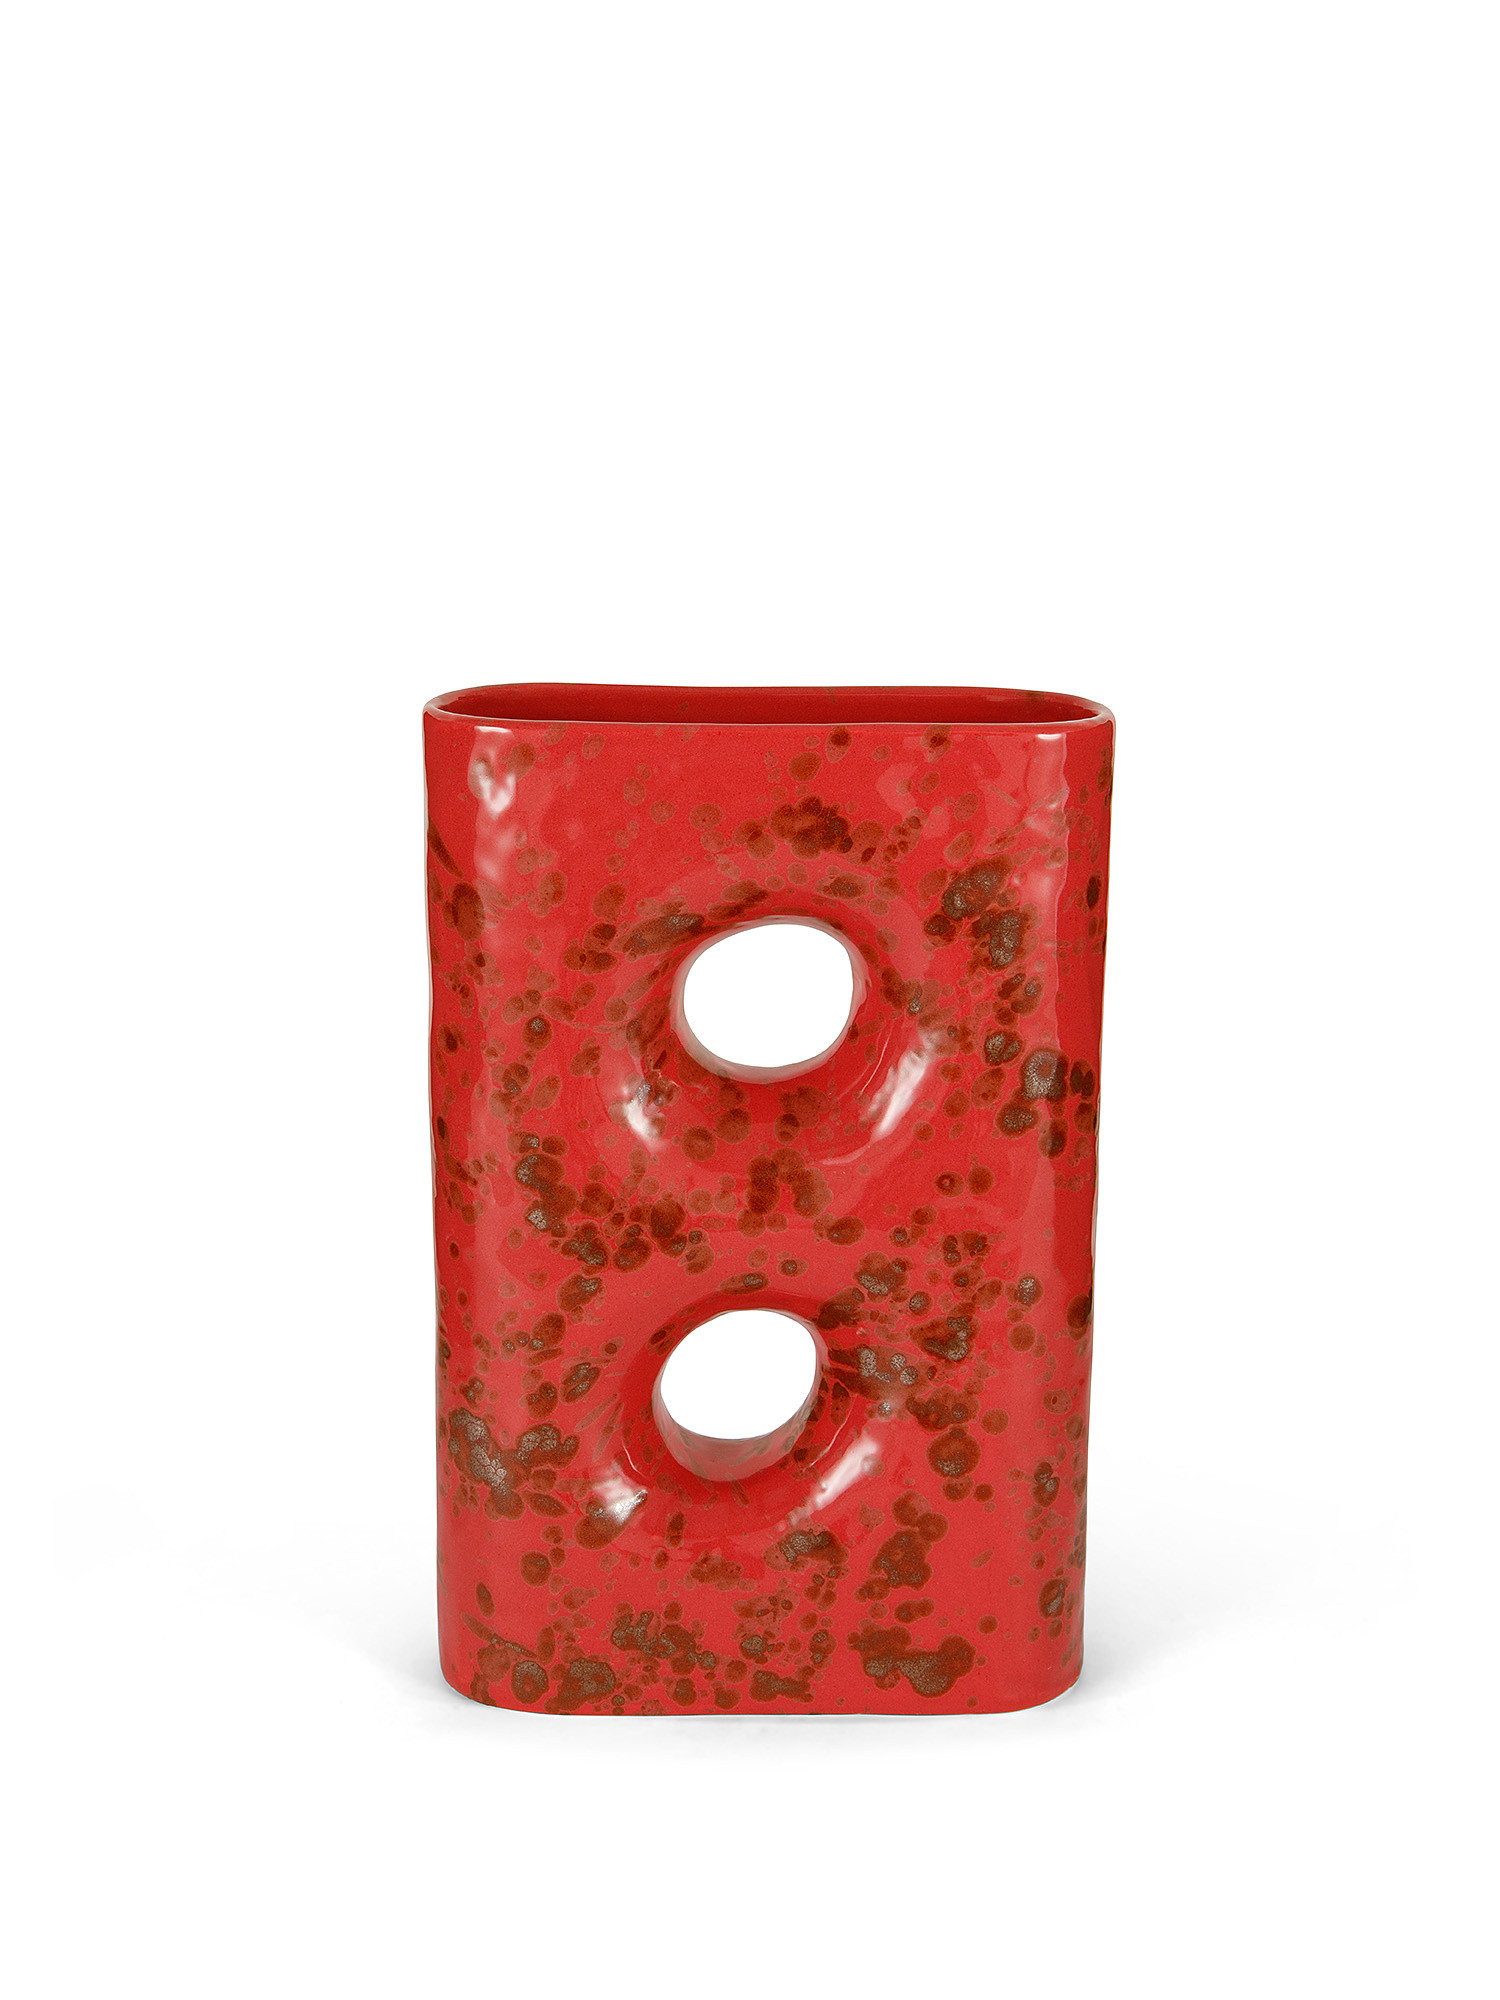 Vaso scultura ceramica artigianale, Rosso, large